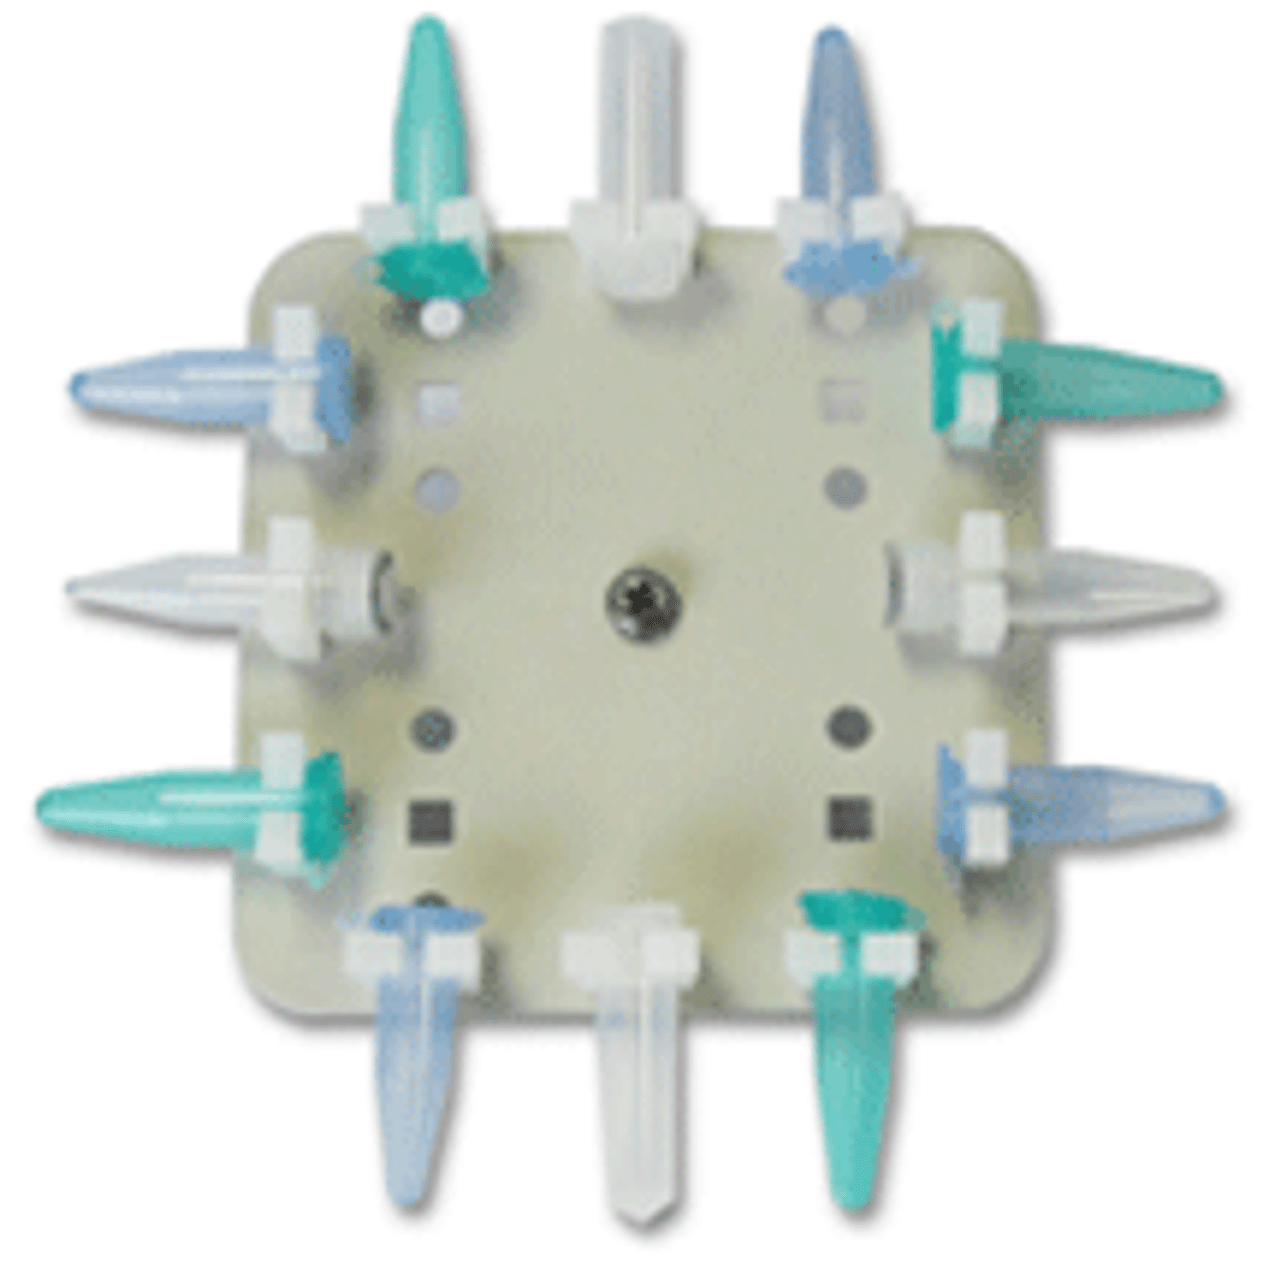 Benchmark Scientific H6004 Incu-Mixer MP2 Vortex Mixer